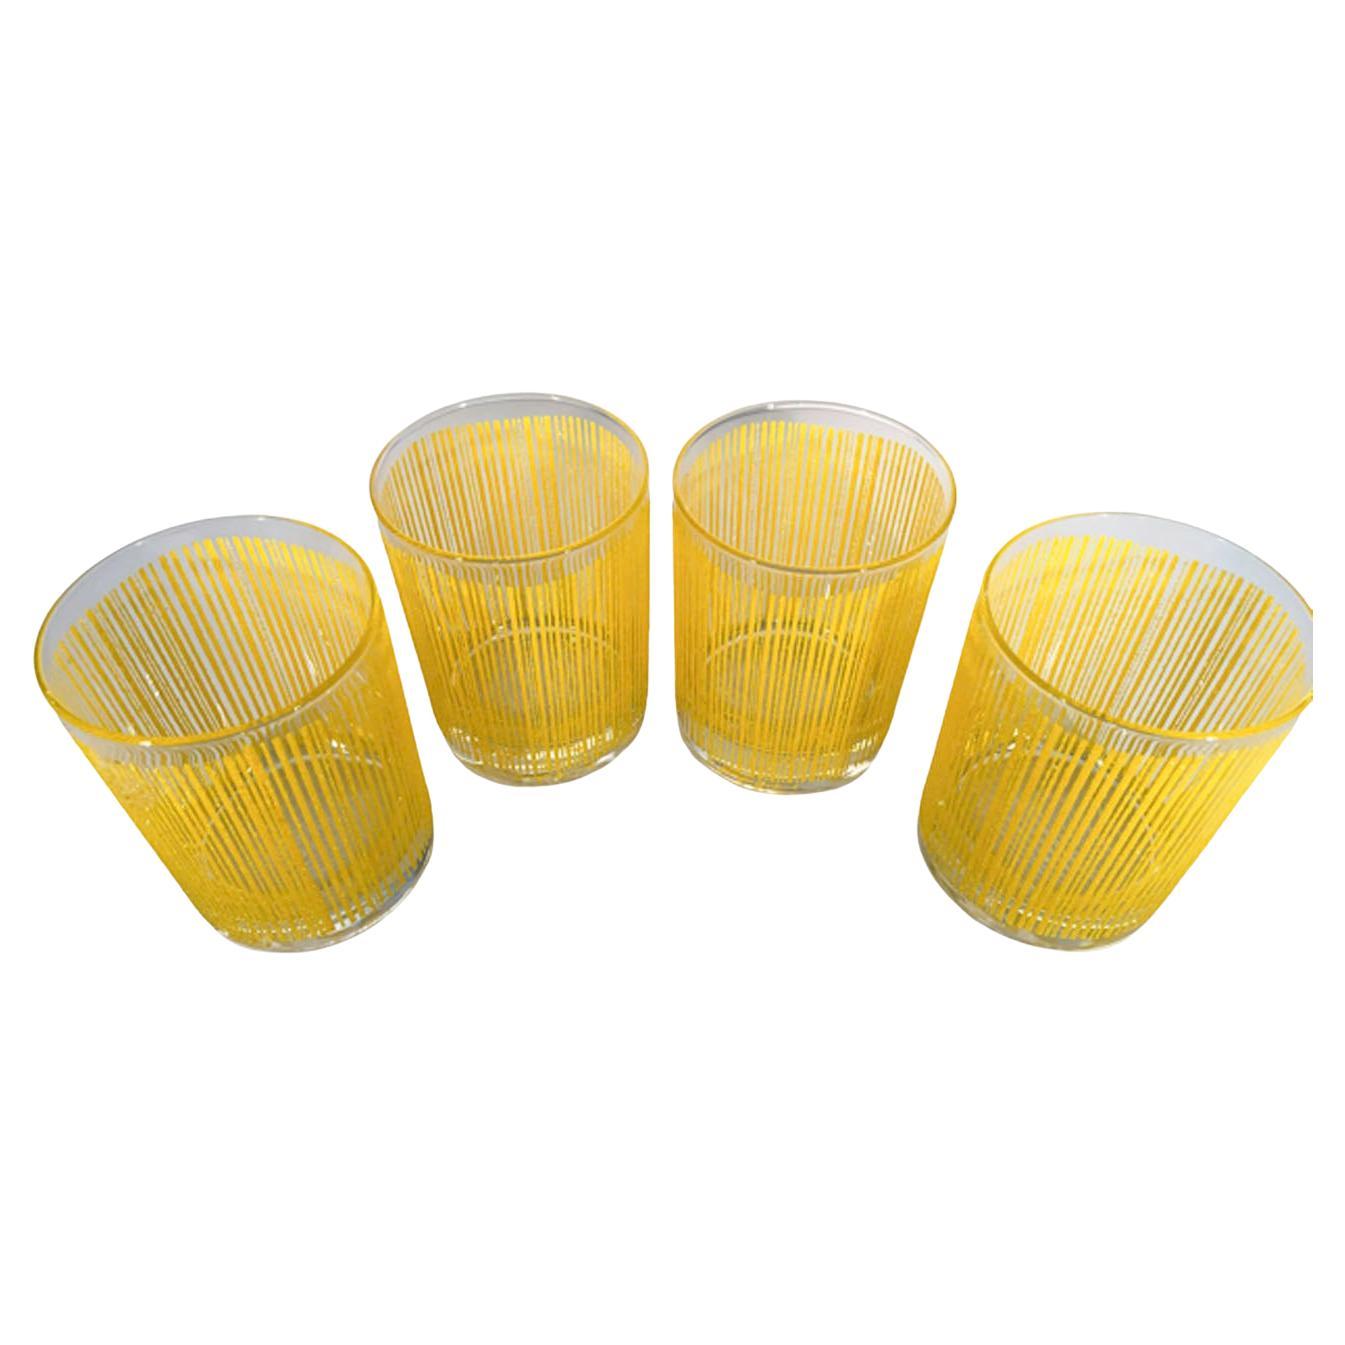 Quatre rares verres Georges Briard à motif de roches en jaune en vente